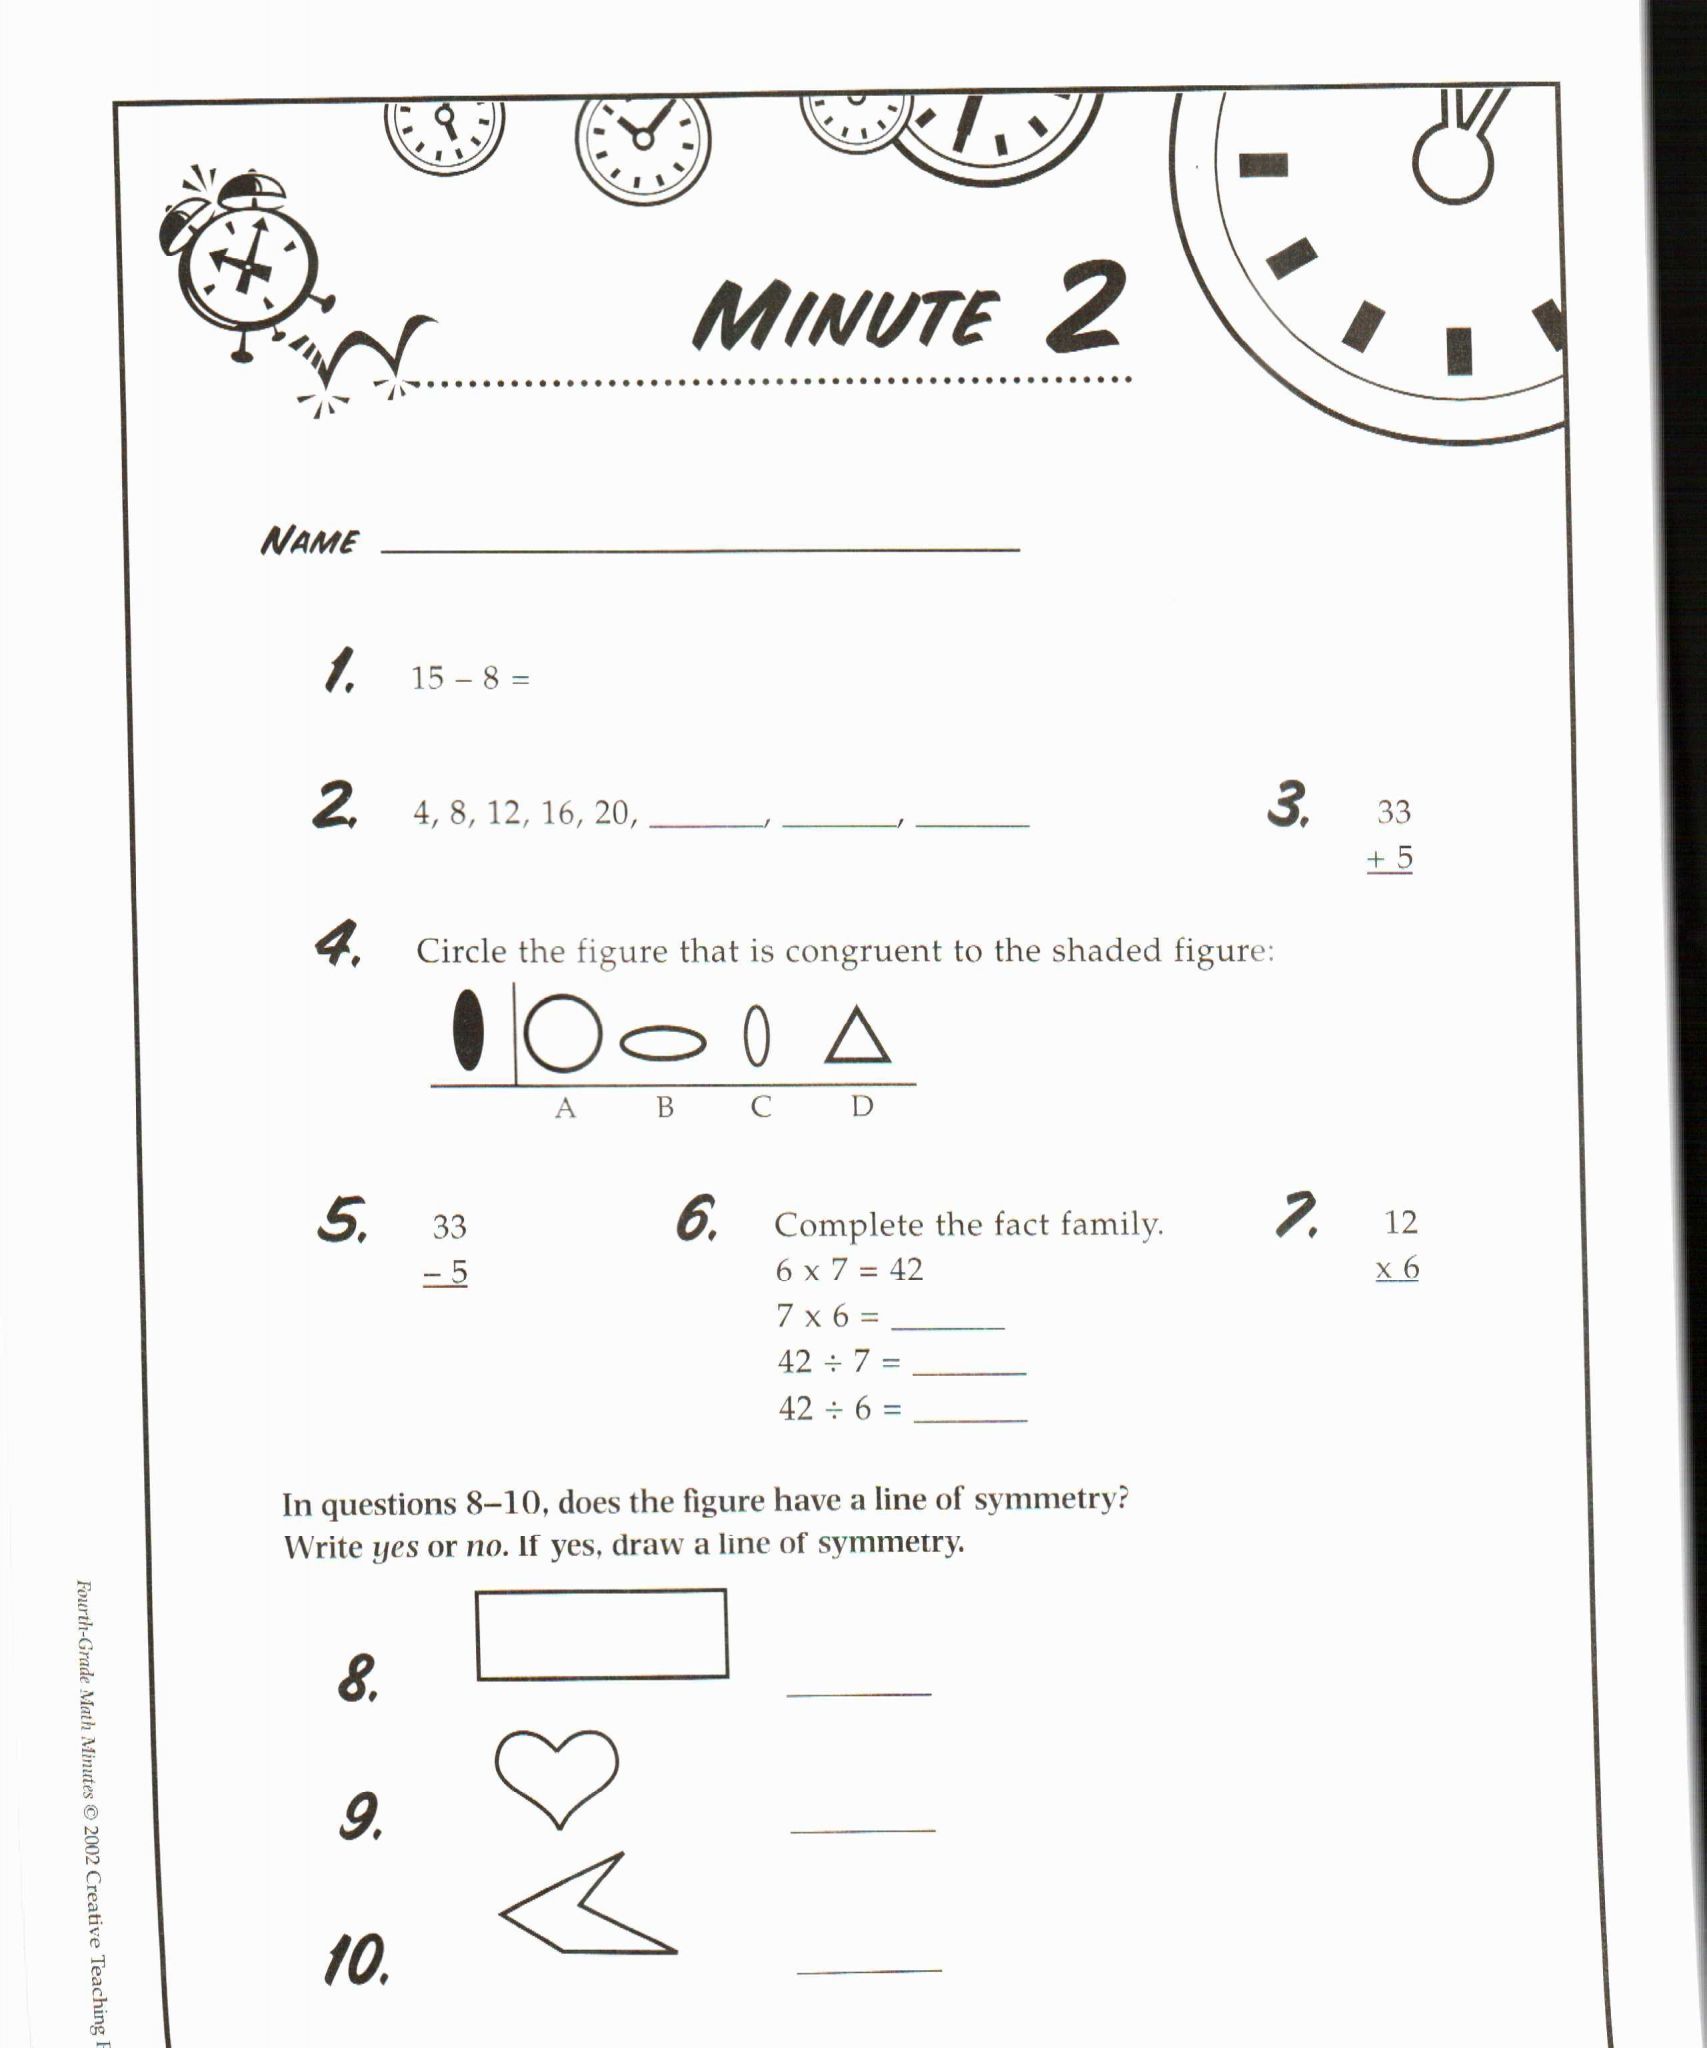 7th Grade Math Worksheets and Answer Key together with 10 Lovely 3rd Grade Math Worksheets